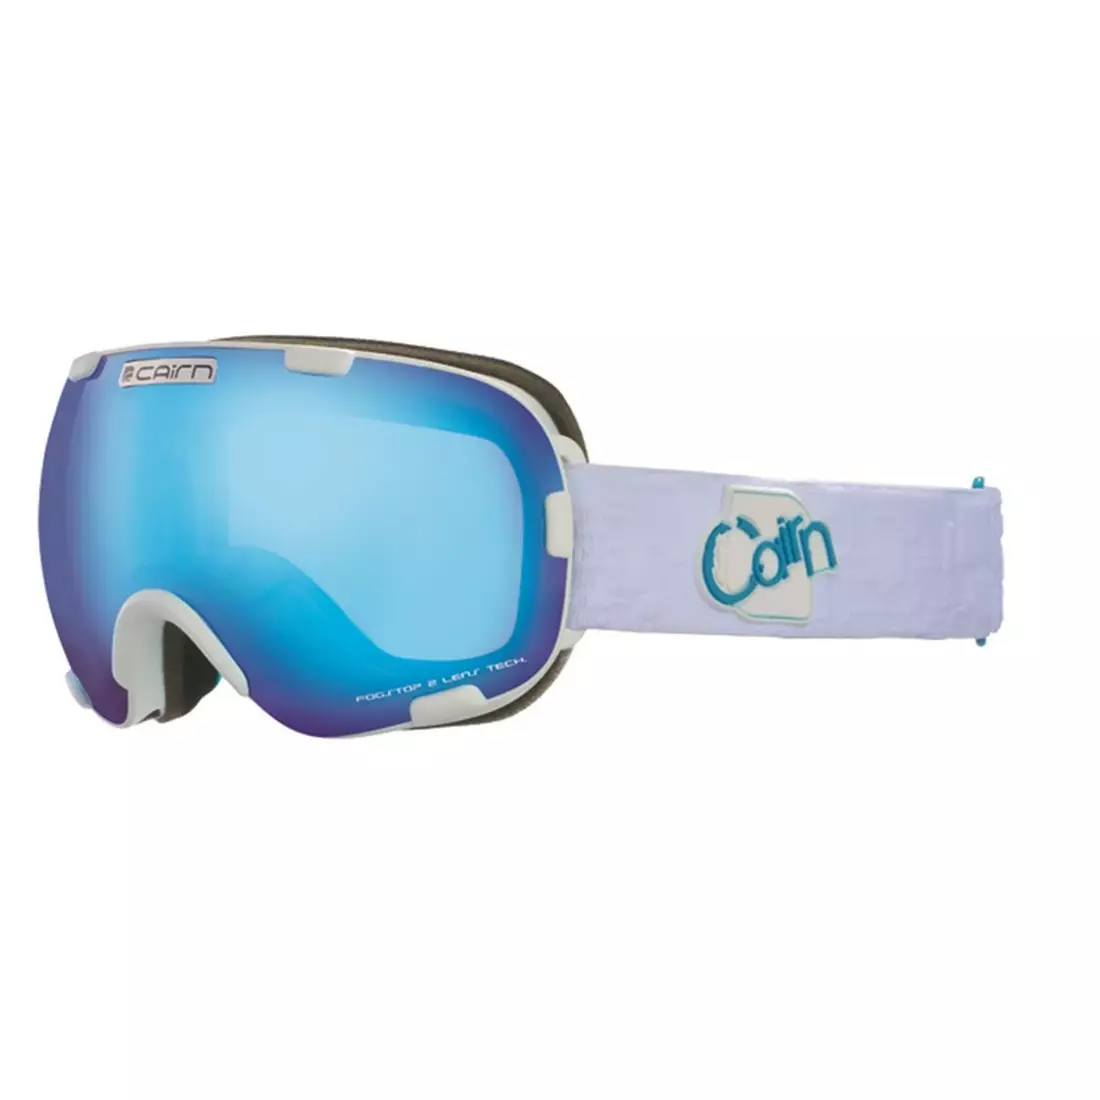 CAIRN ski/snowboard goggles SPIRIT light blue 5806818201